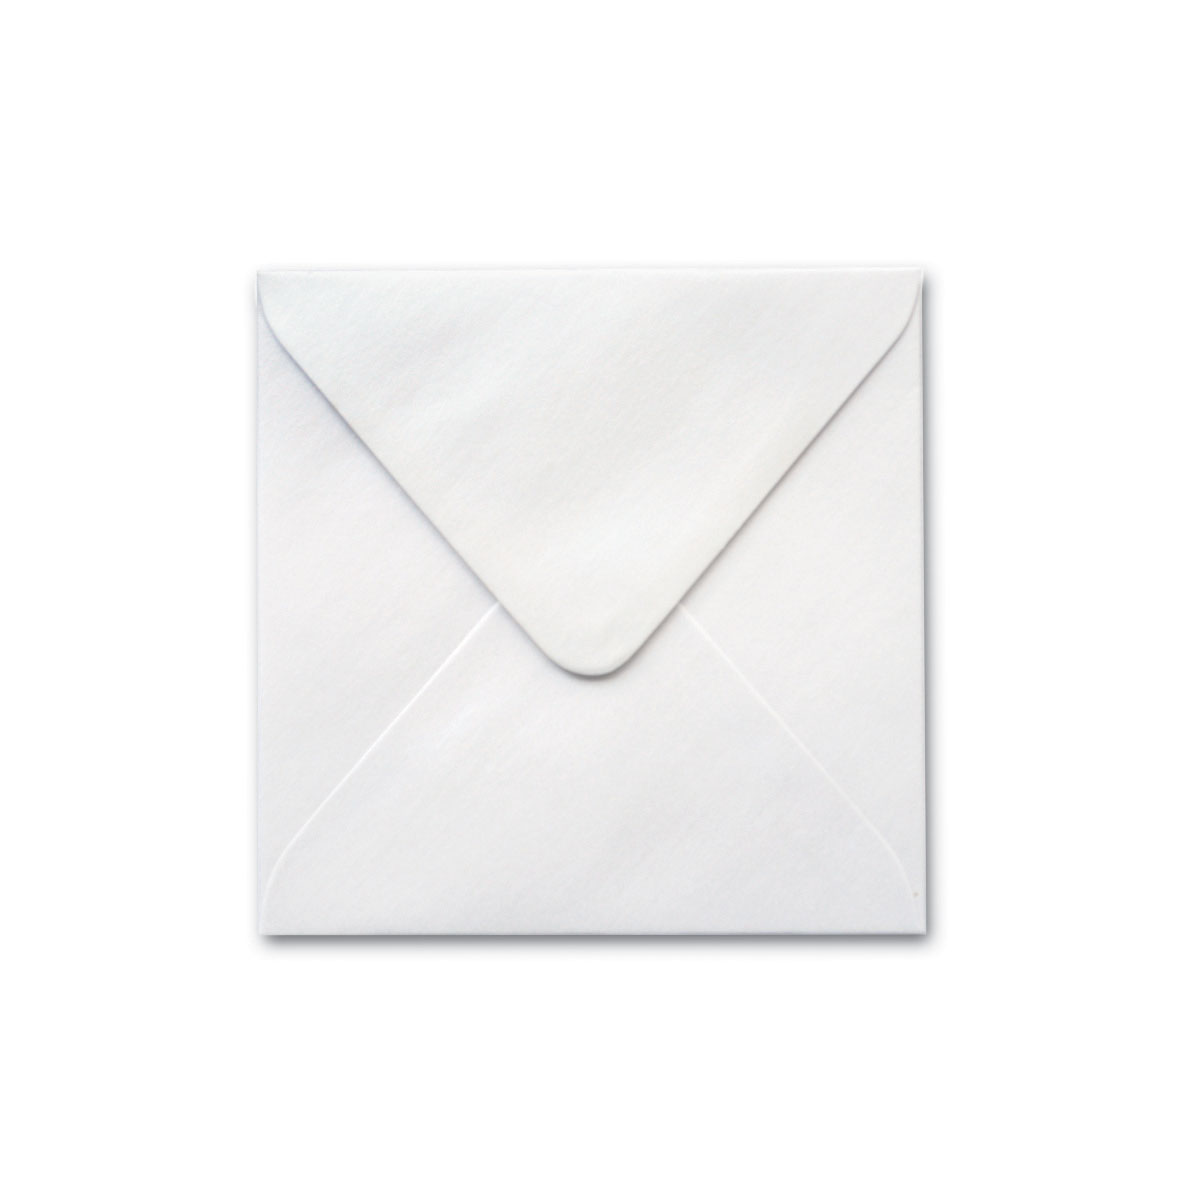 150mm Square StarDream Crystal Envelope